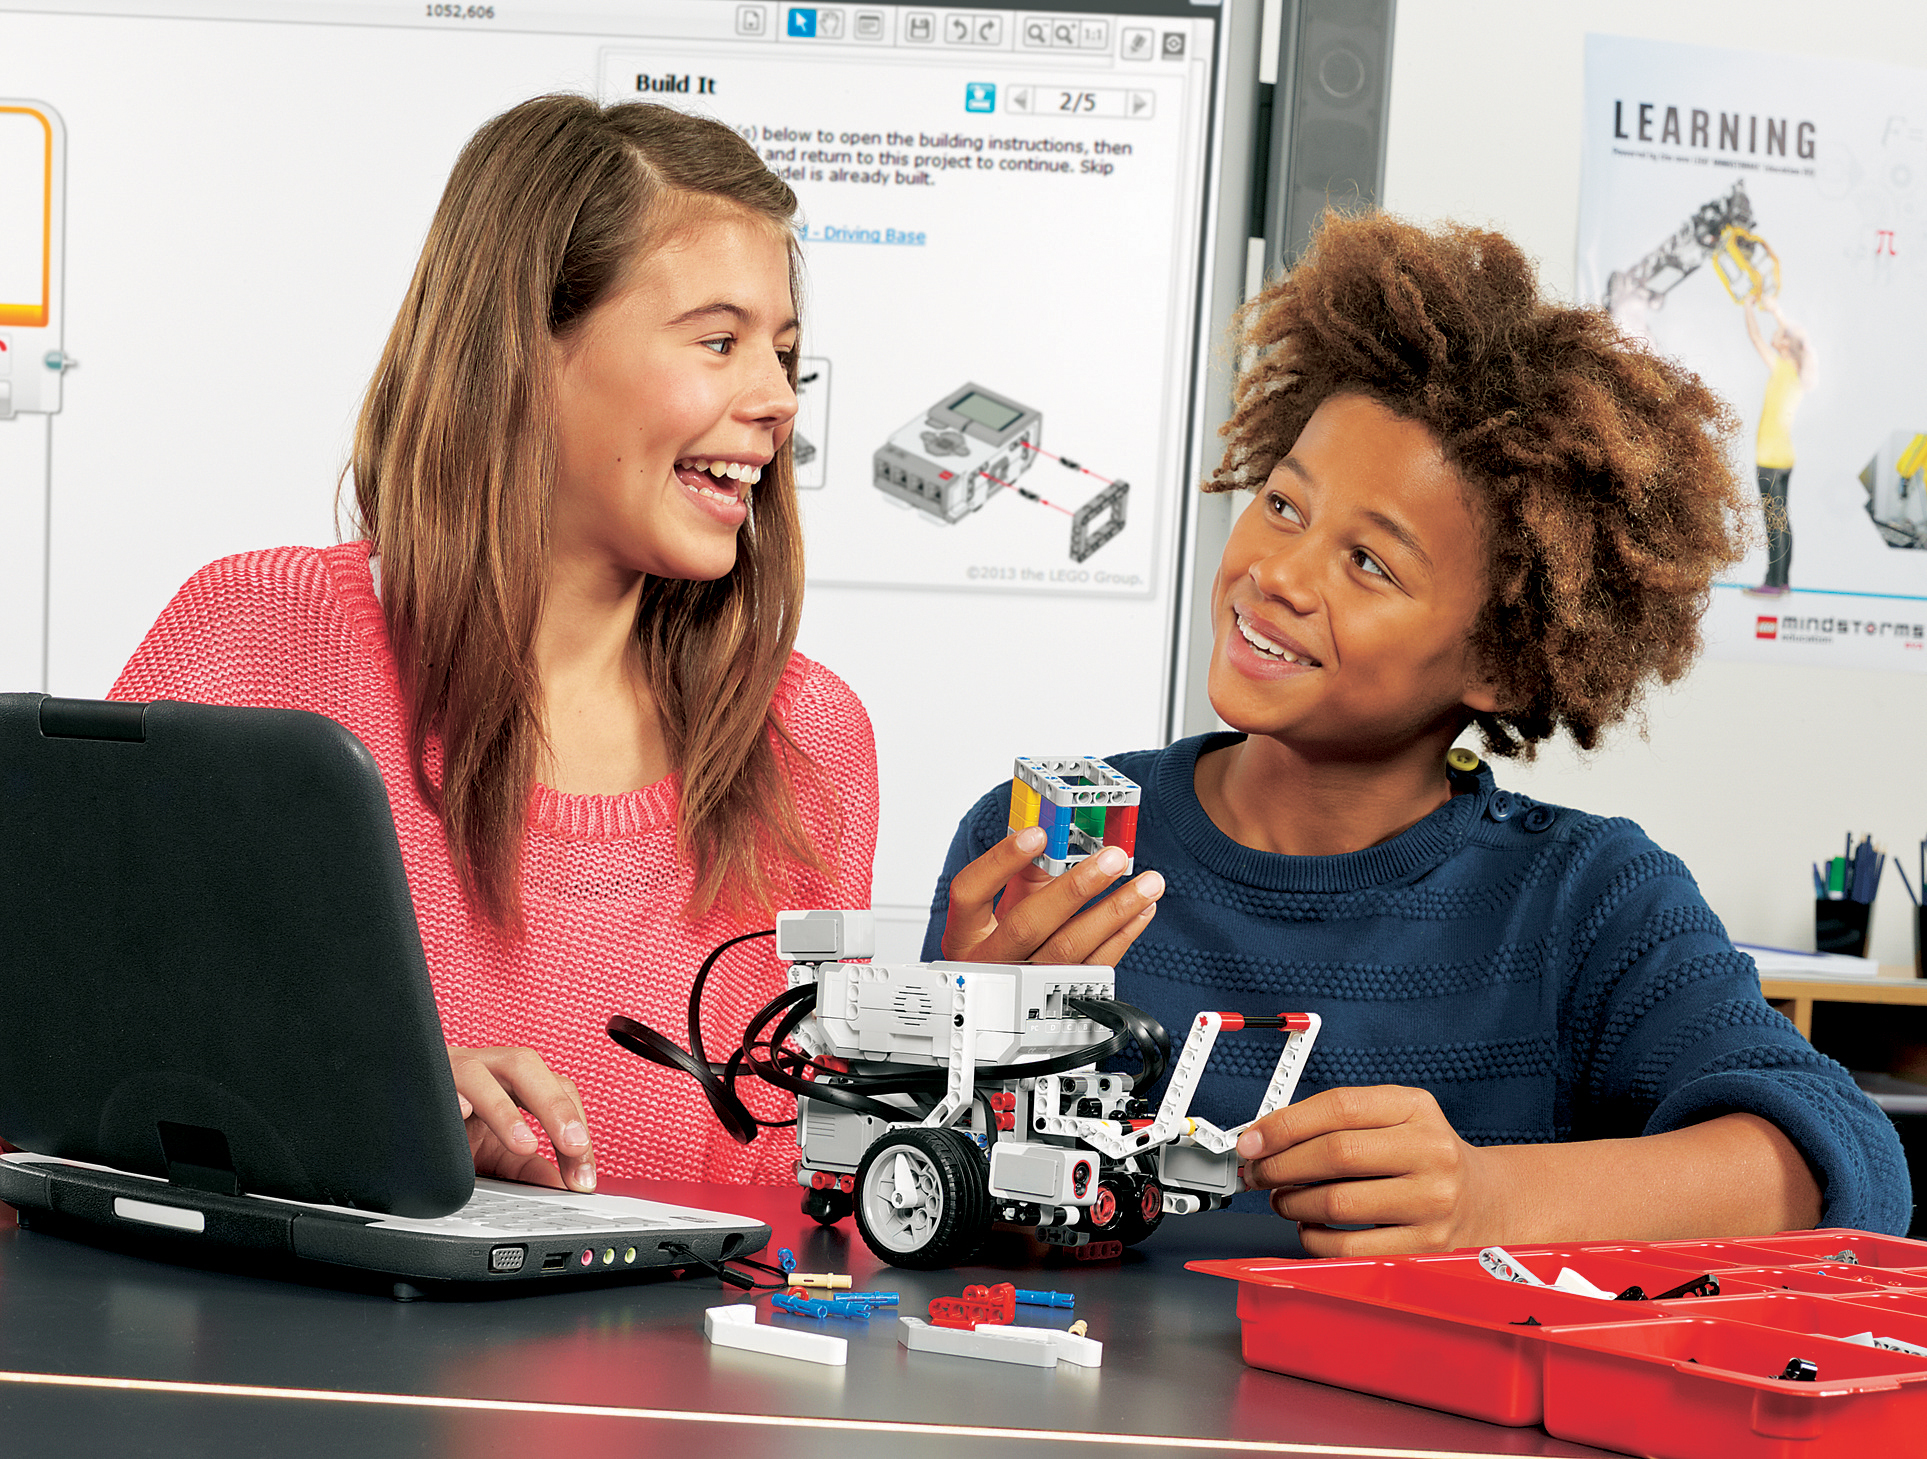 Educational robot for schools: Lego, Ozobot, Thymio...